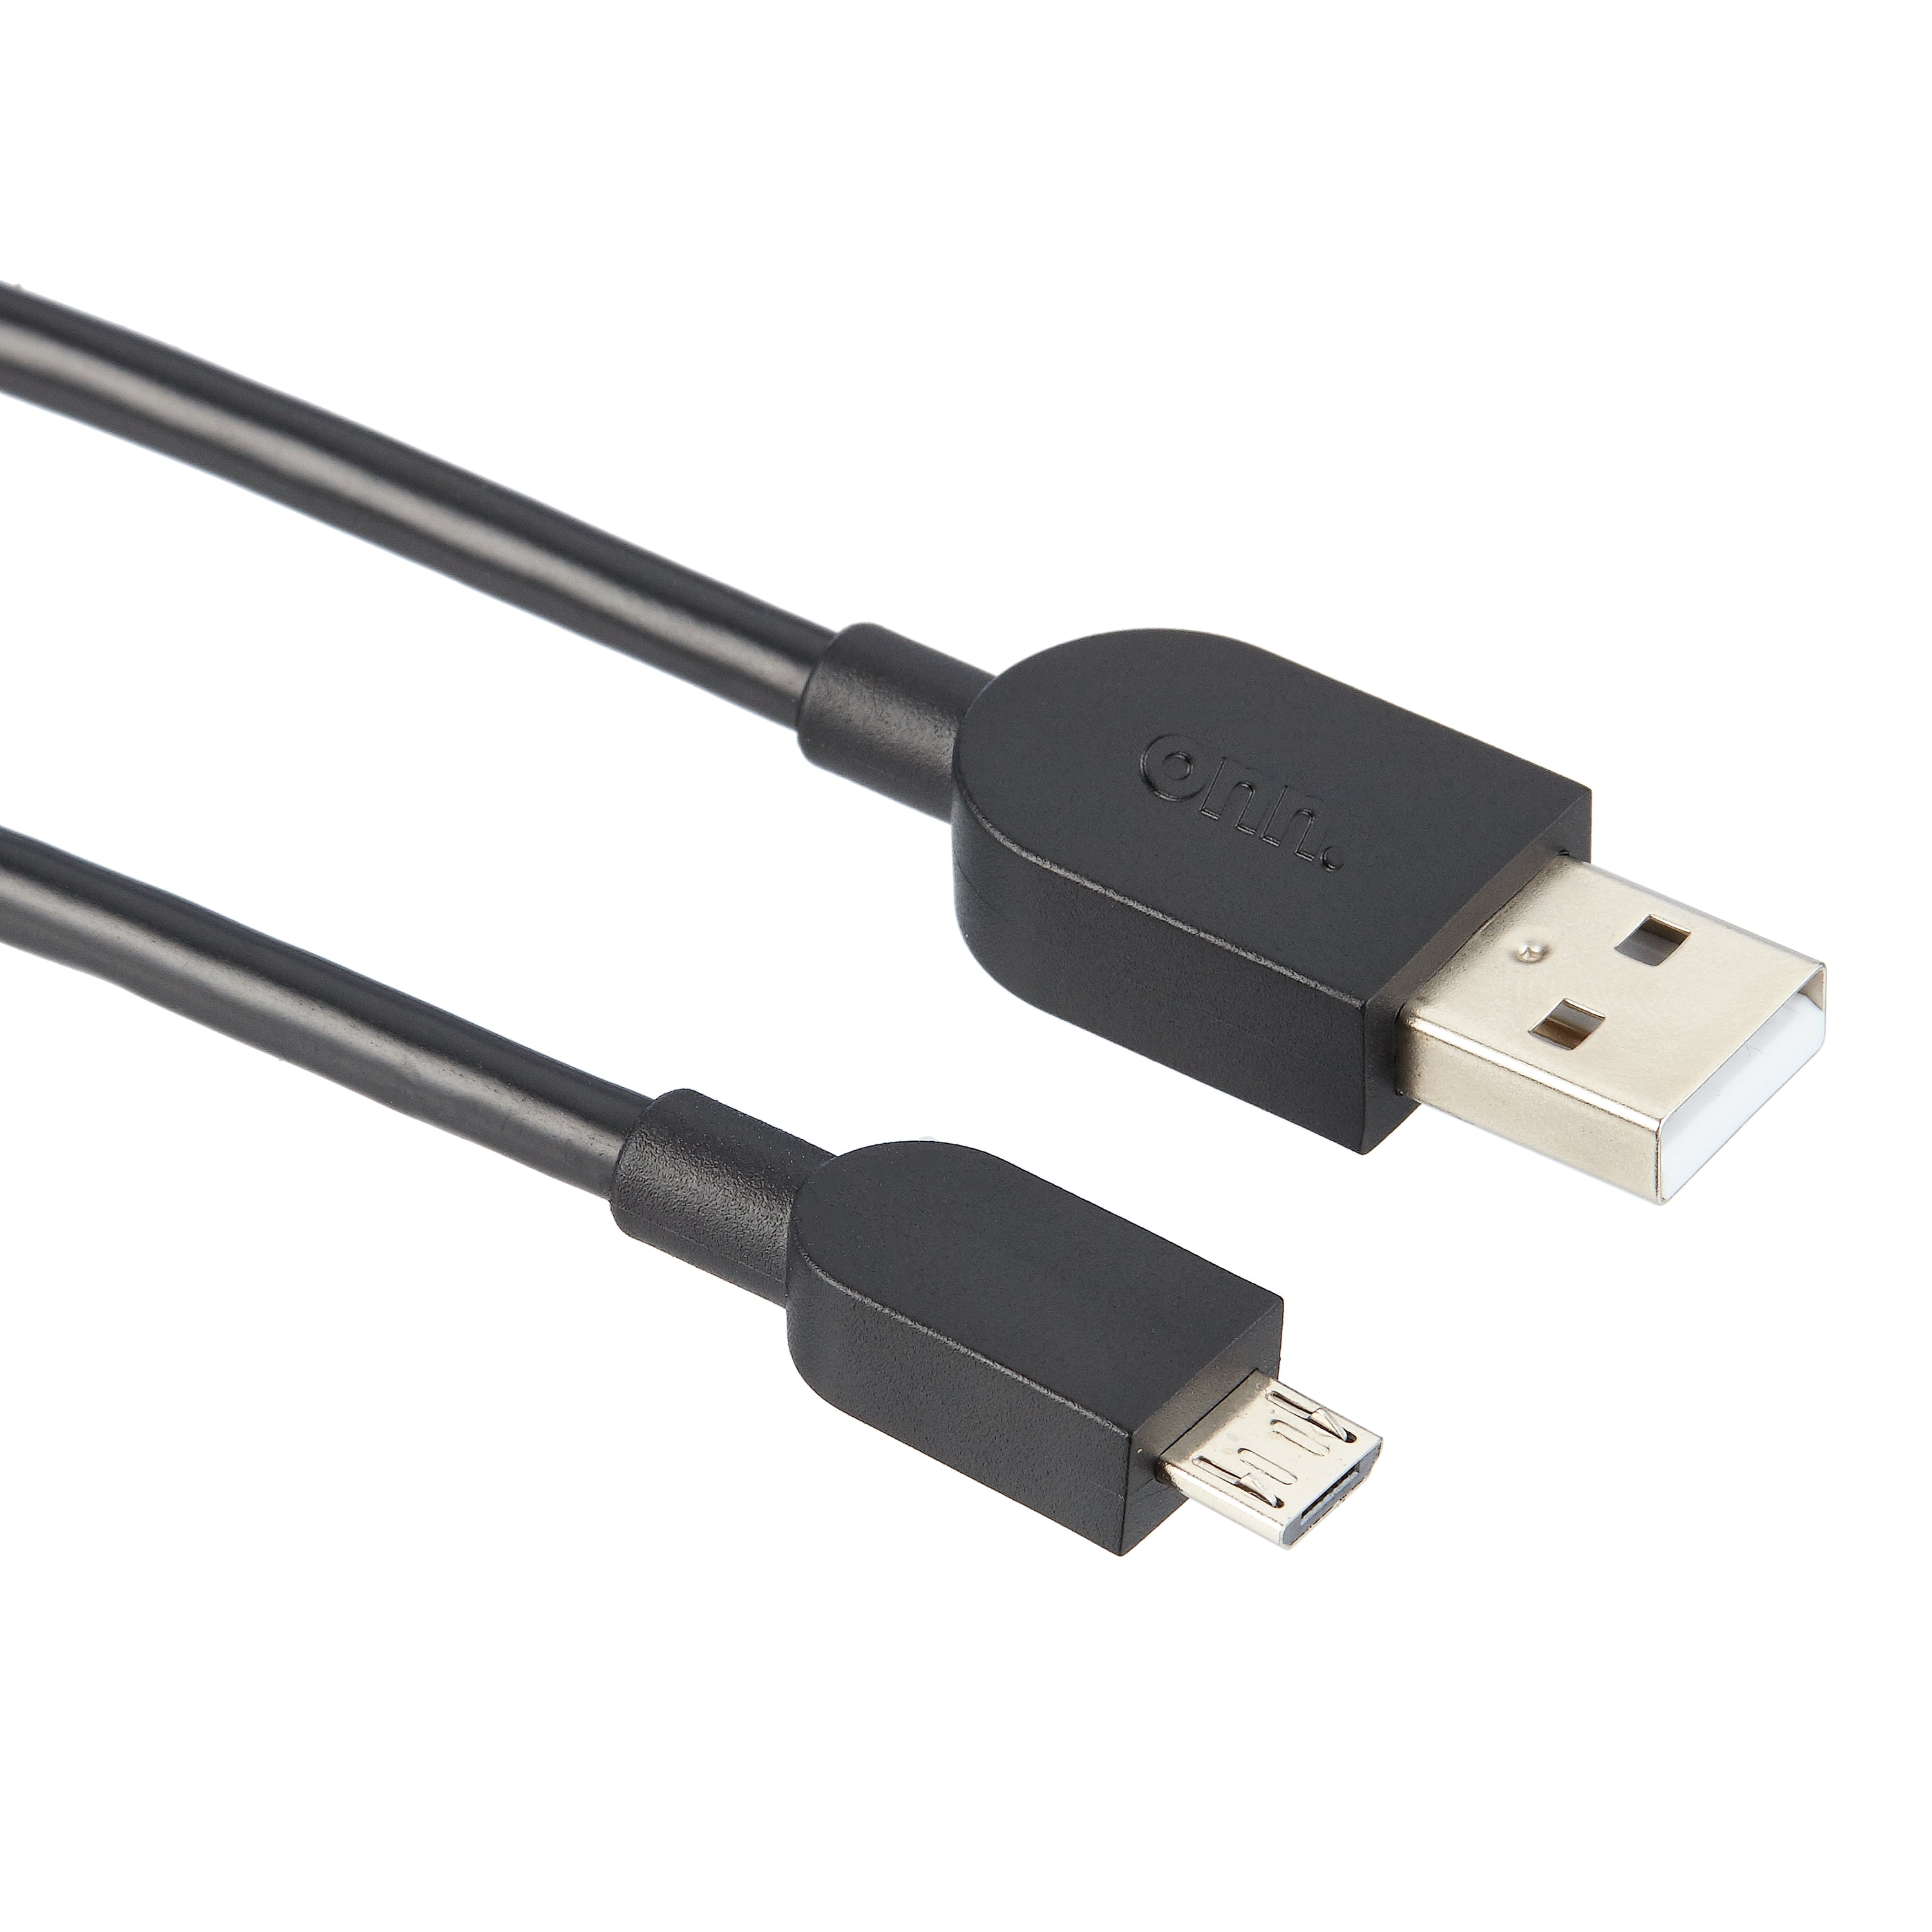 intern Egypte wenselijk onn. Charging Cable for the PS4 DualShock 4 Controller, 10' - Walmart.com